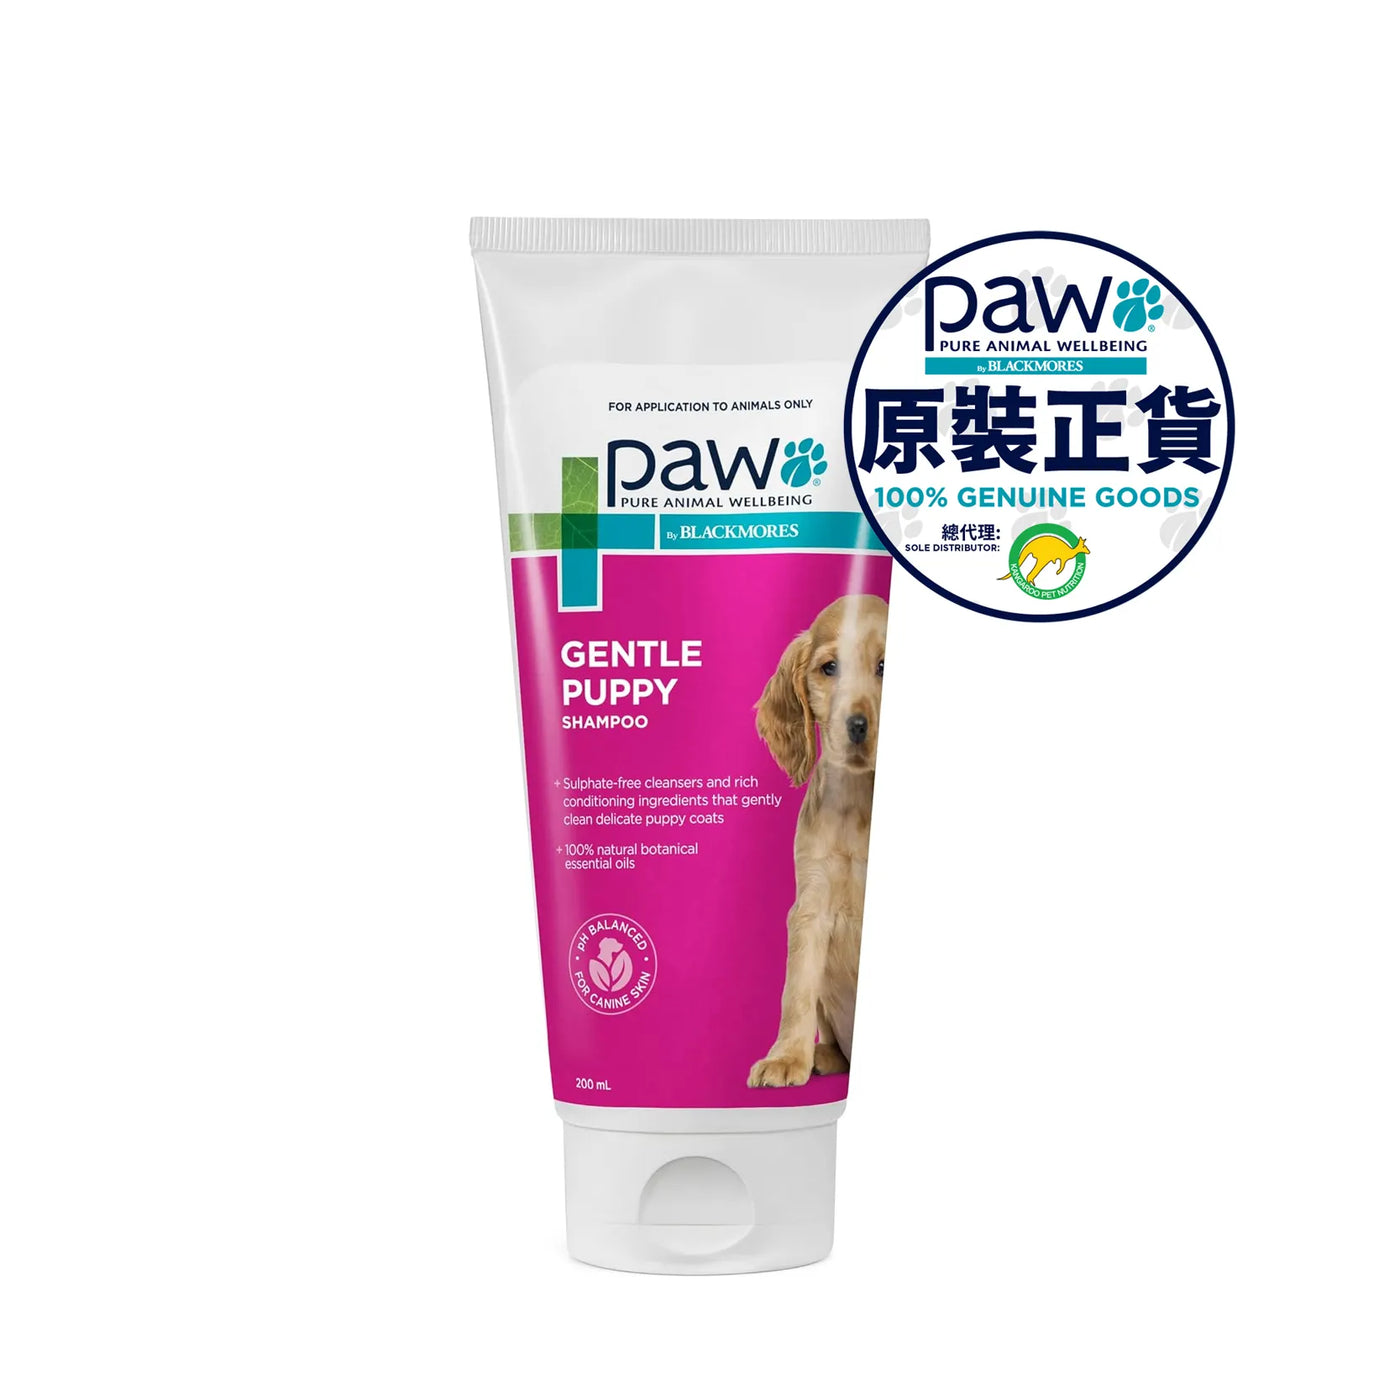 PAW - Puppy Shampoo 200ml